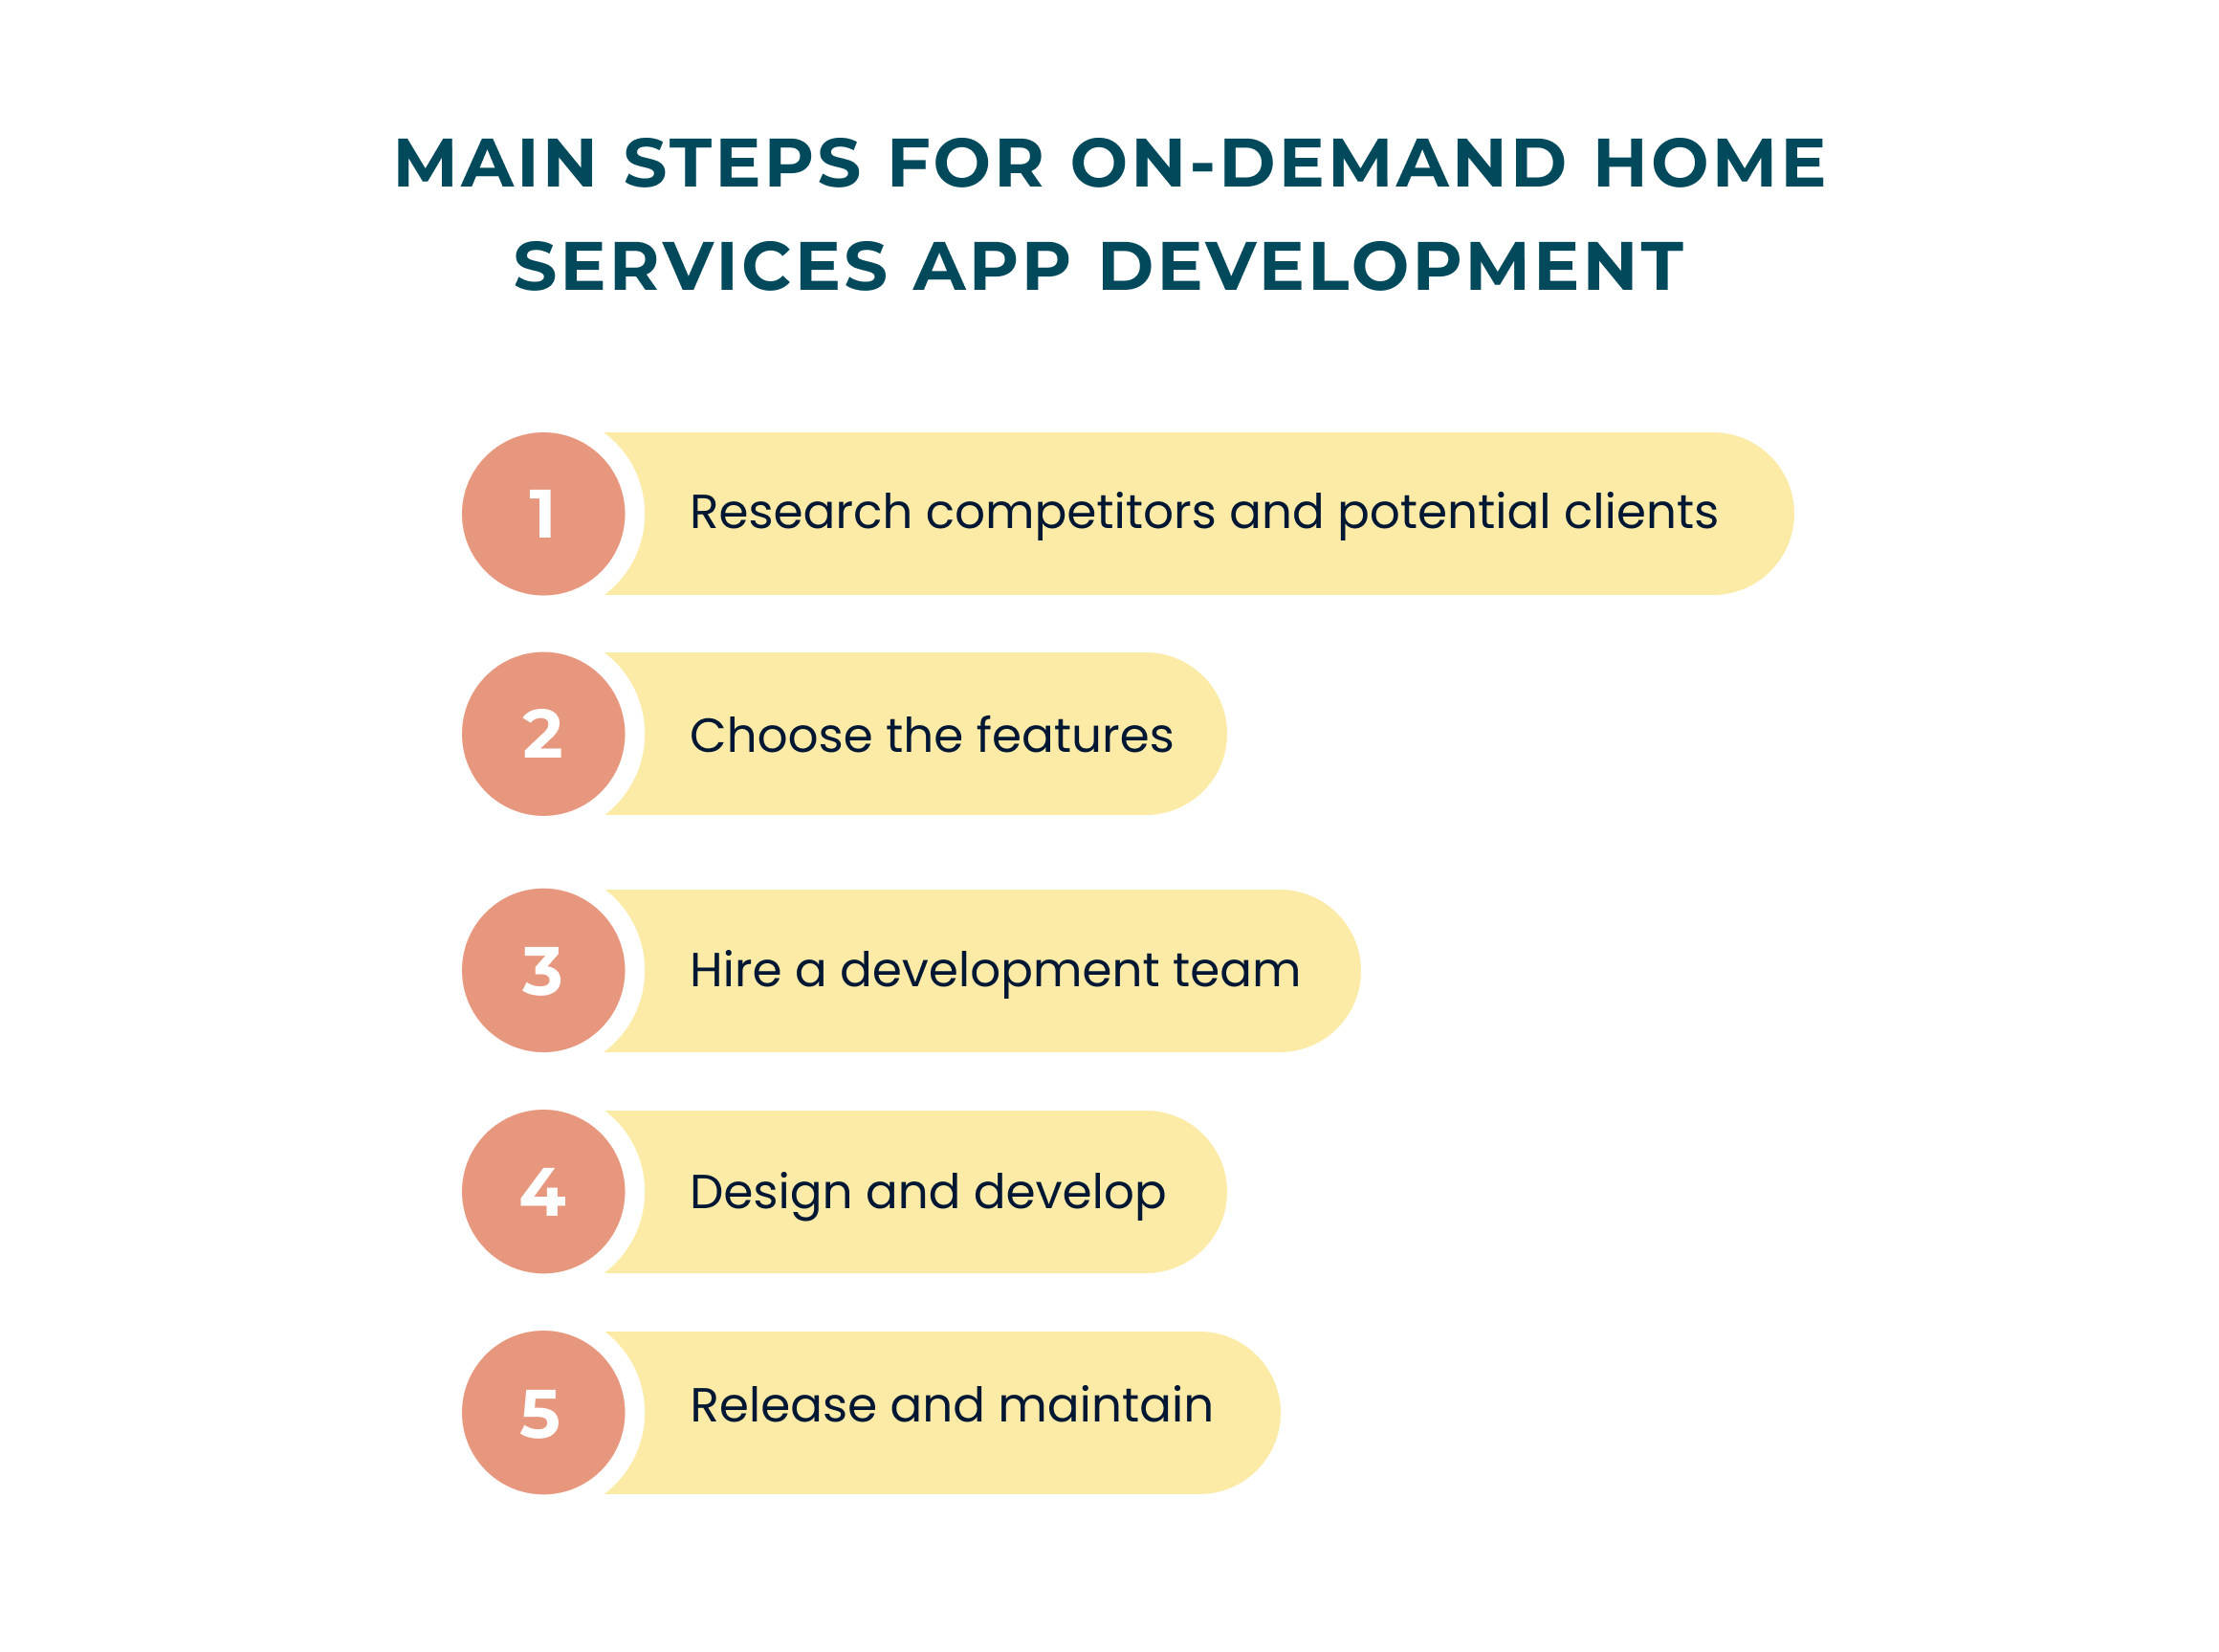 Home services app development steps 